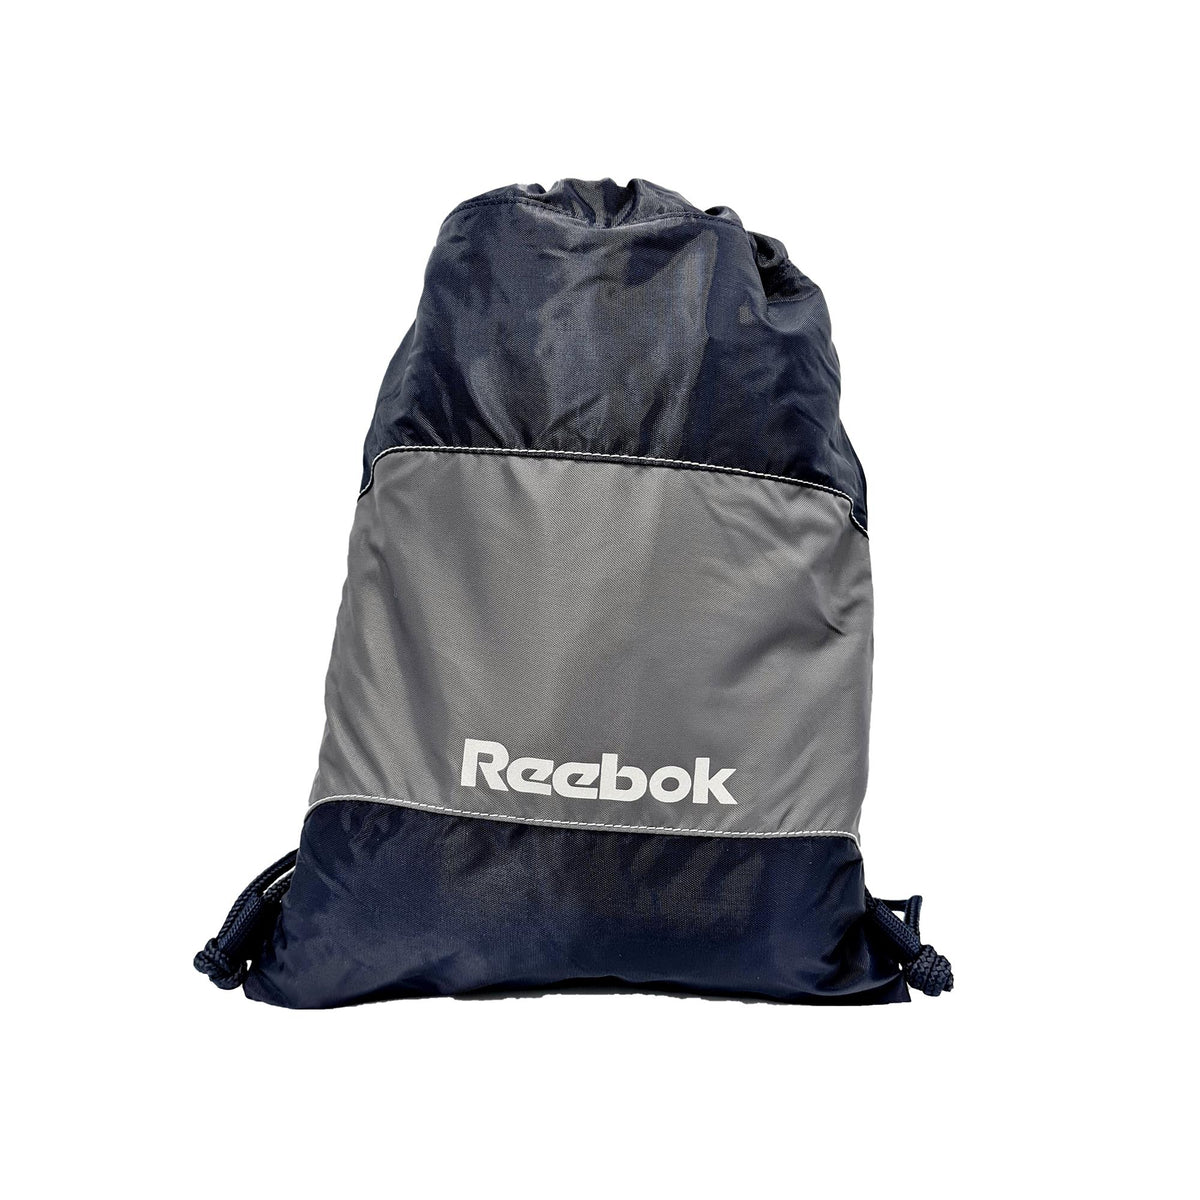 Reebok Kids Contrast Drawstring Bag